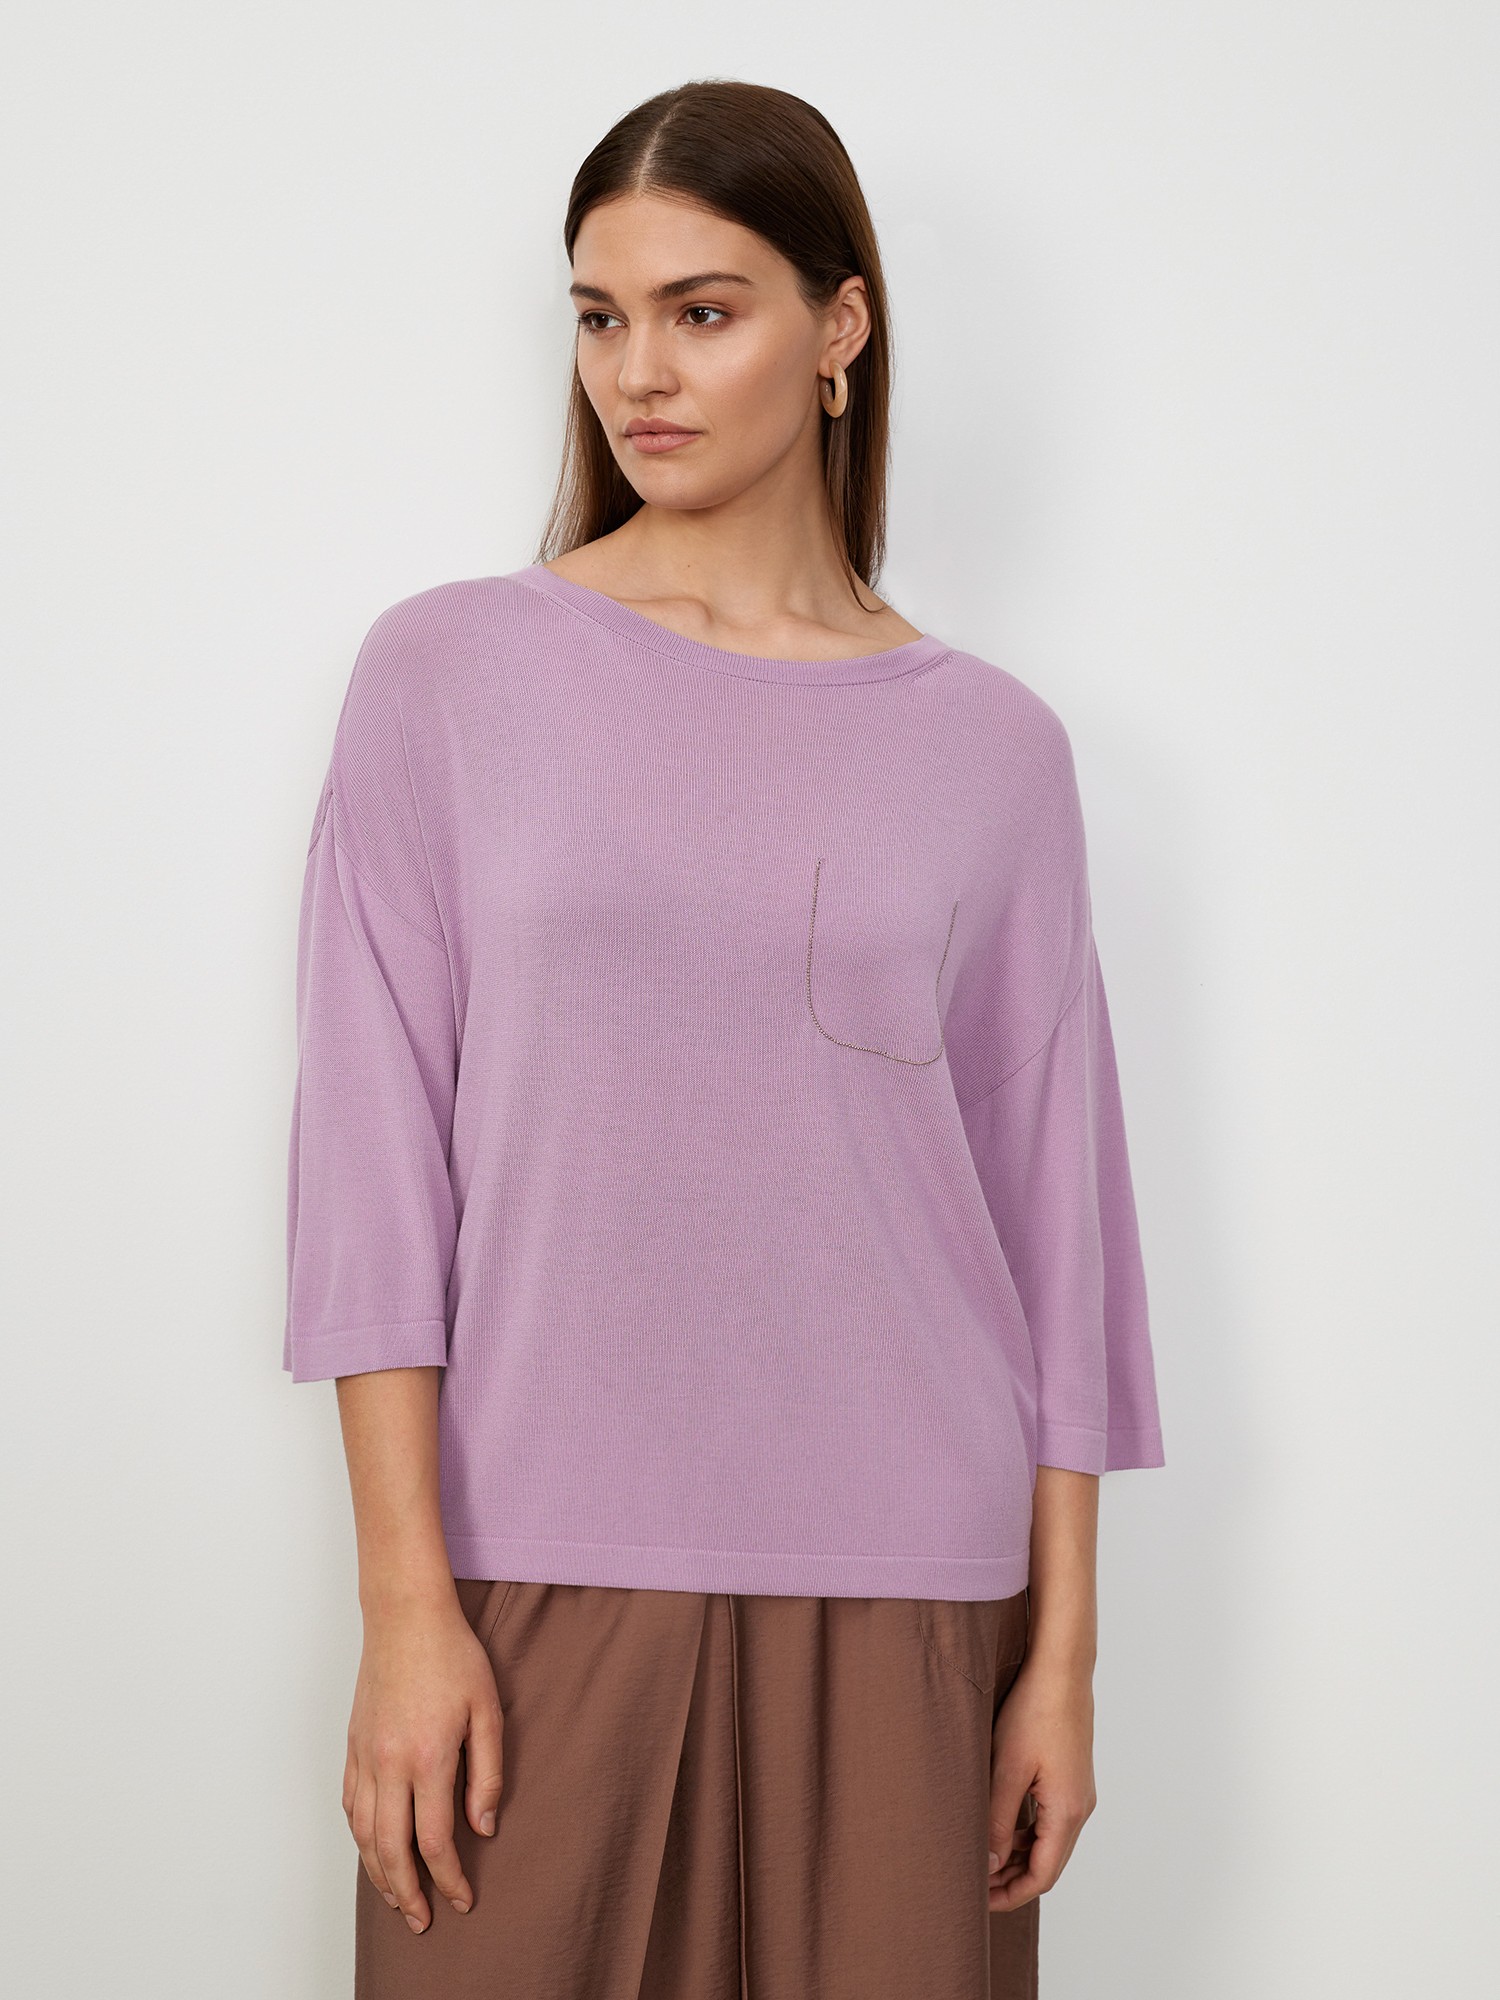 Блуза вязаная с монилью Lalis BL1069V, цвет фиолетовый, размер 50 - фото 1